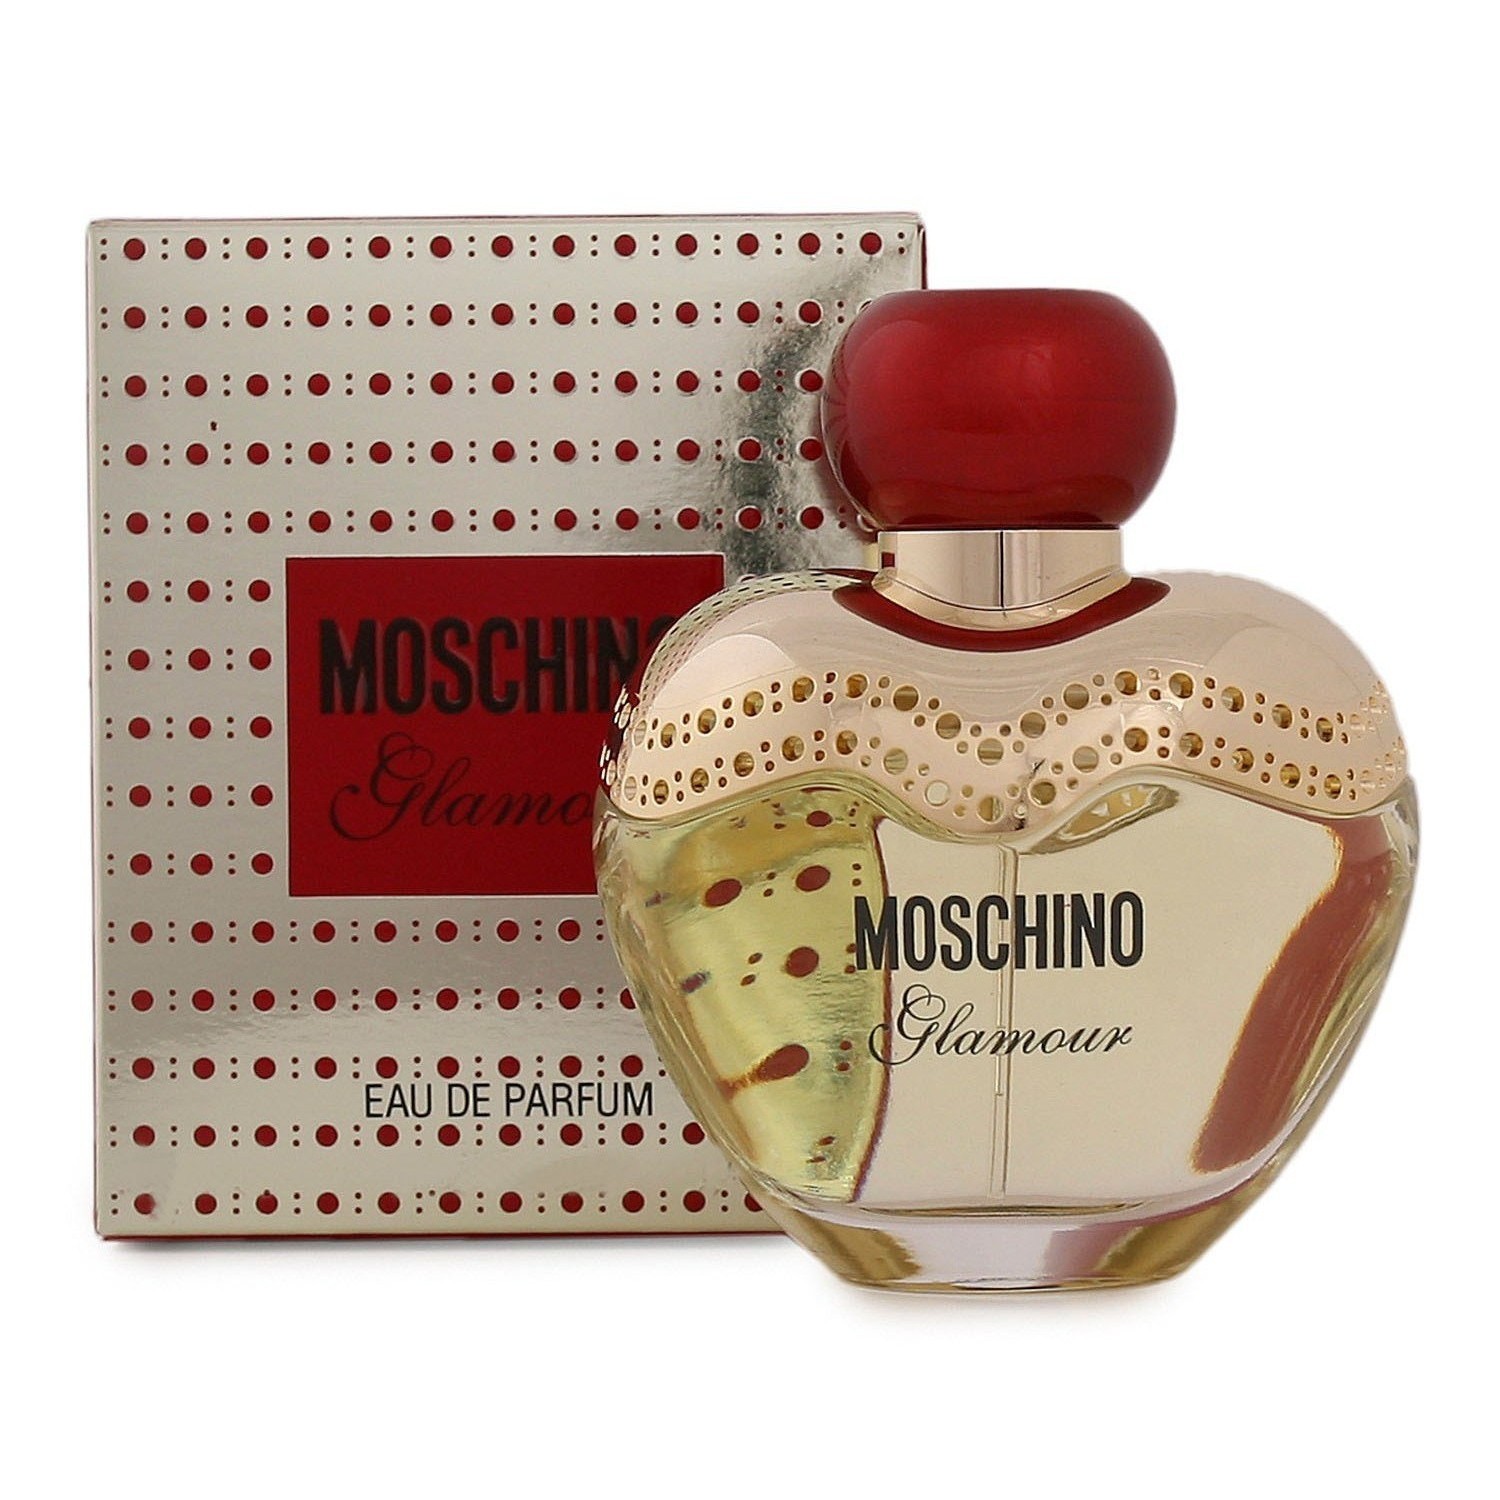 Купить Парфюмерная вода Moschino, Moschino Glamour 50.0ml, Италия